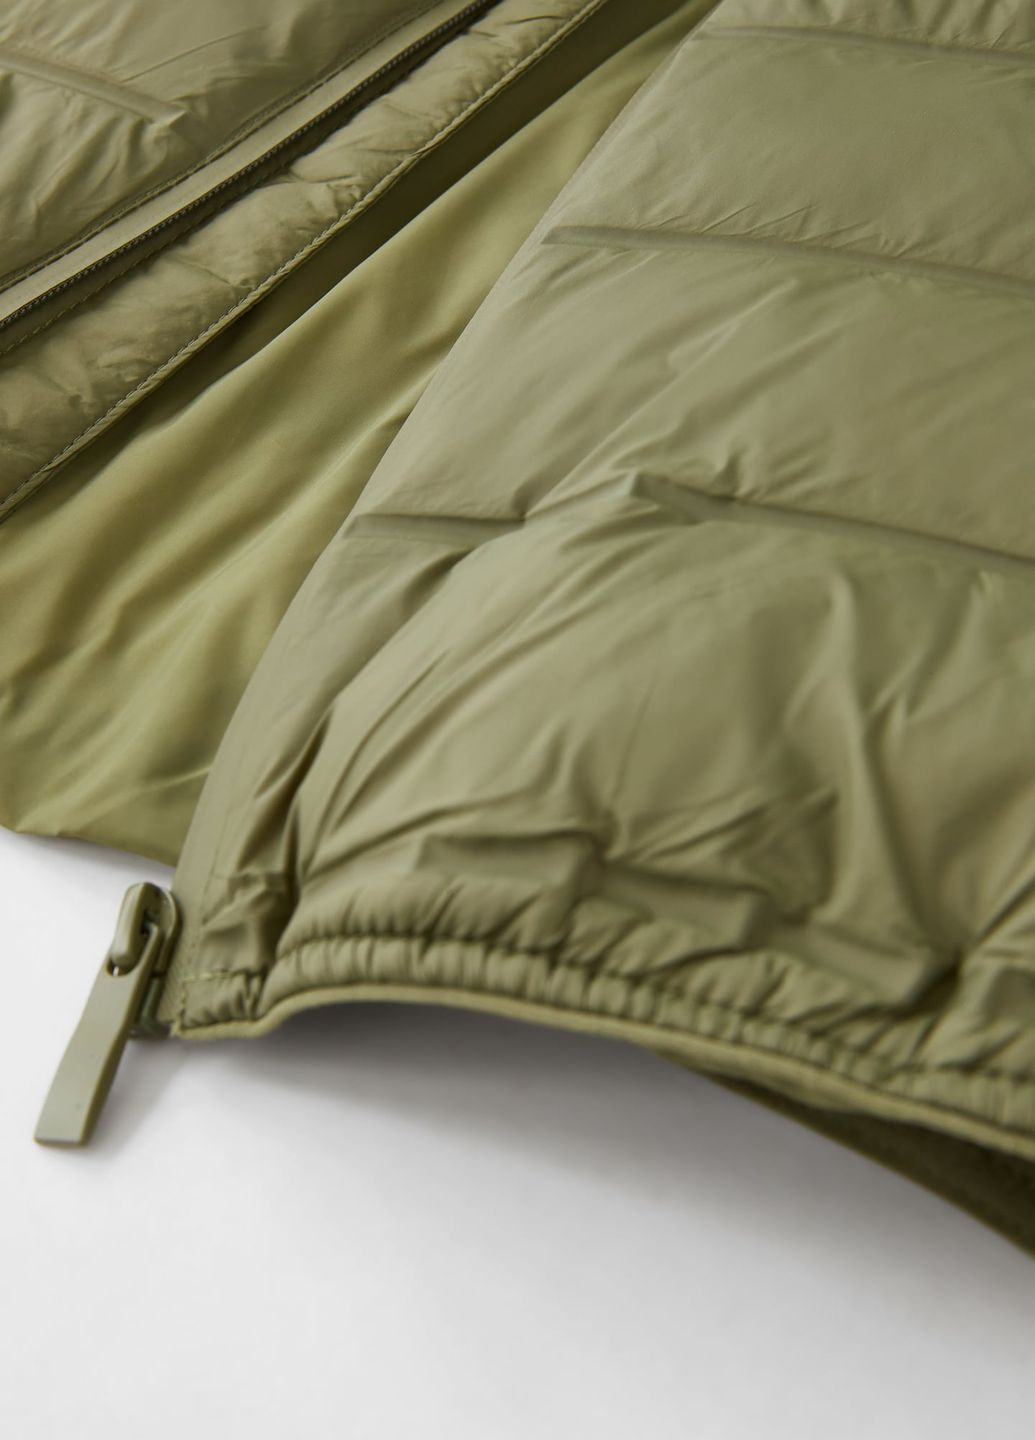 Оливковая (хаки) демисезонная демисезонная куртка для мальчика хаки 5992701505 Zara